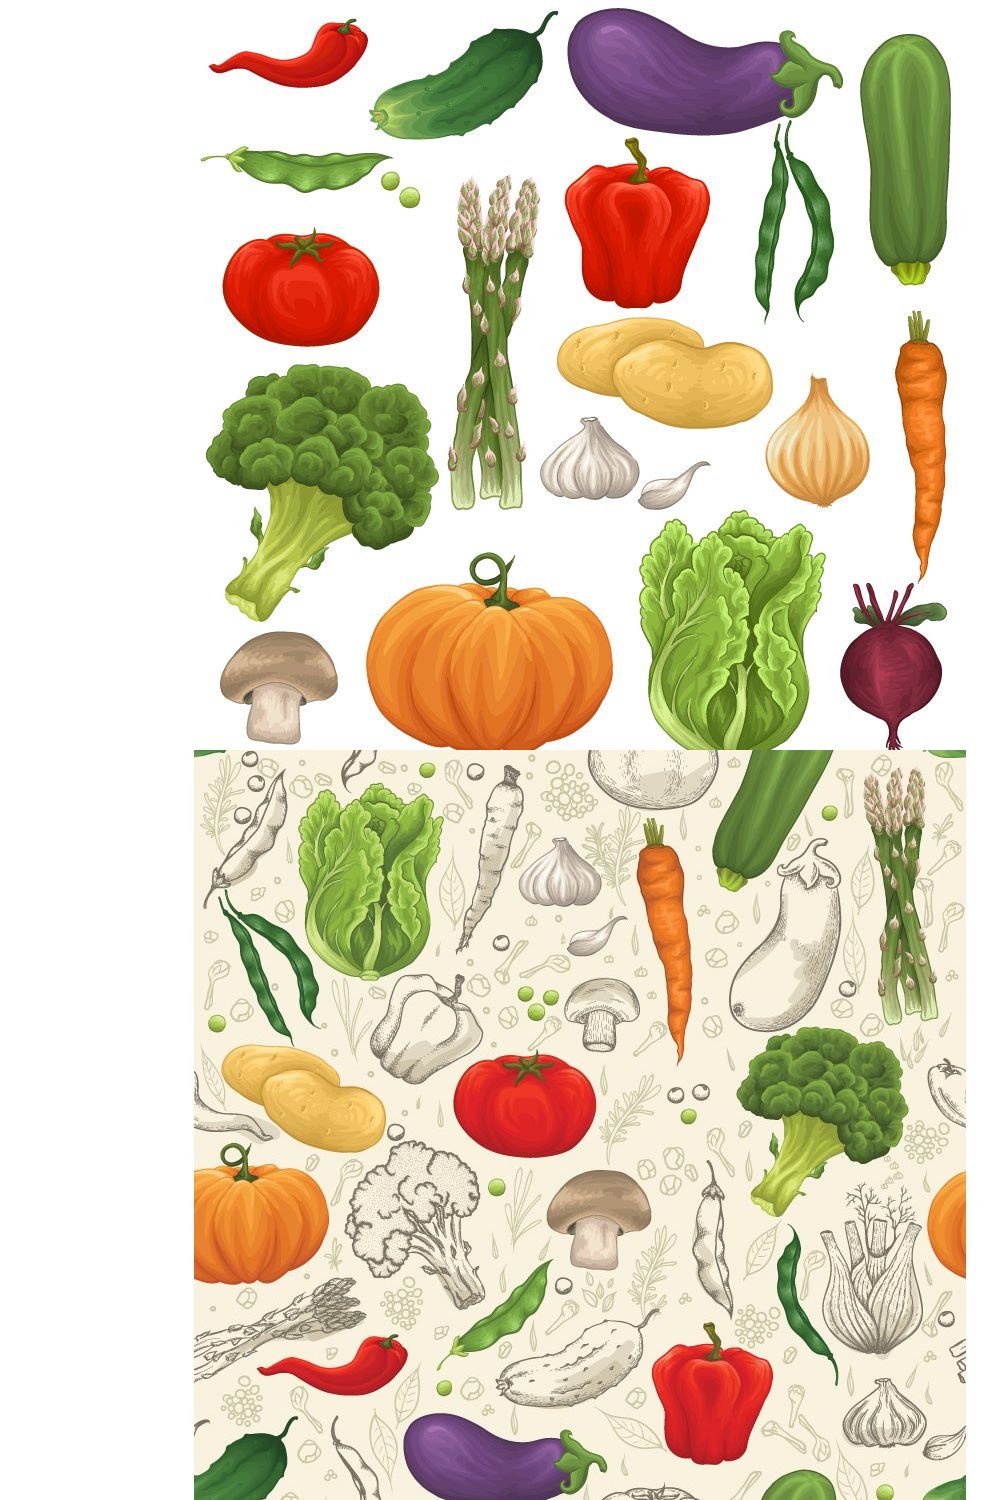 Vegetable set, patterns, backgrounds pinterest preview image.